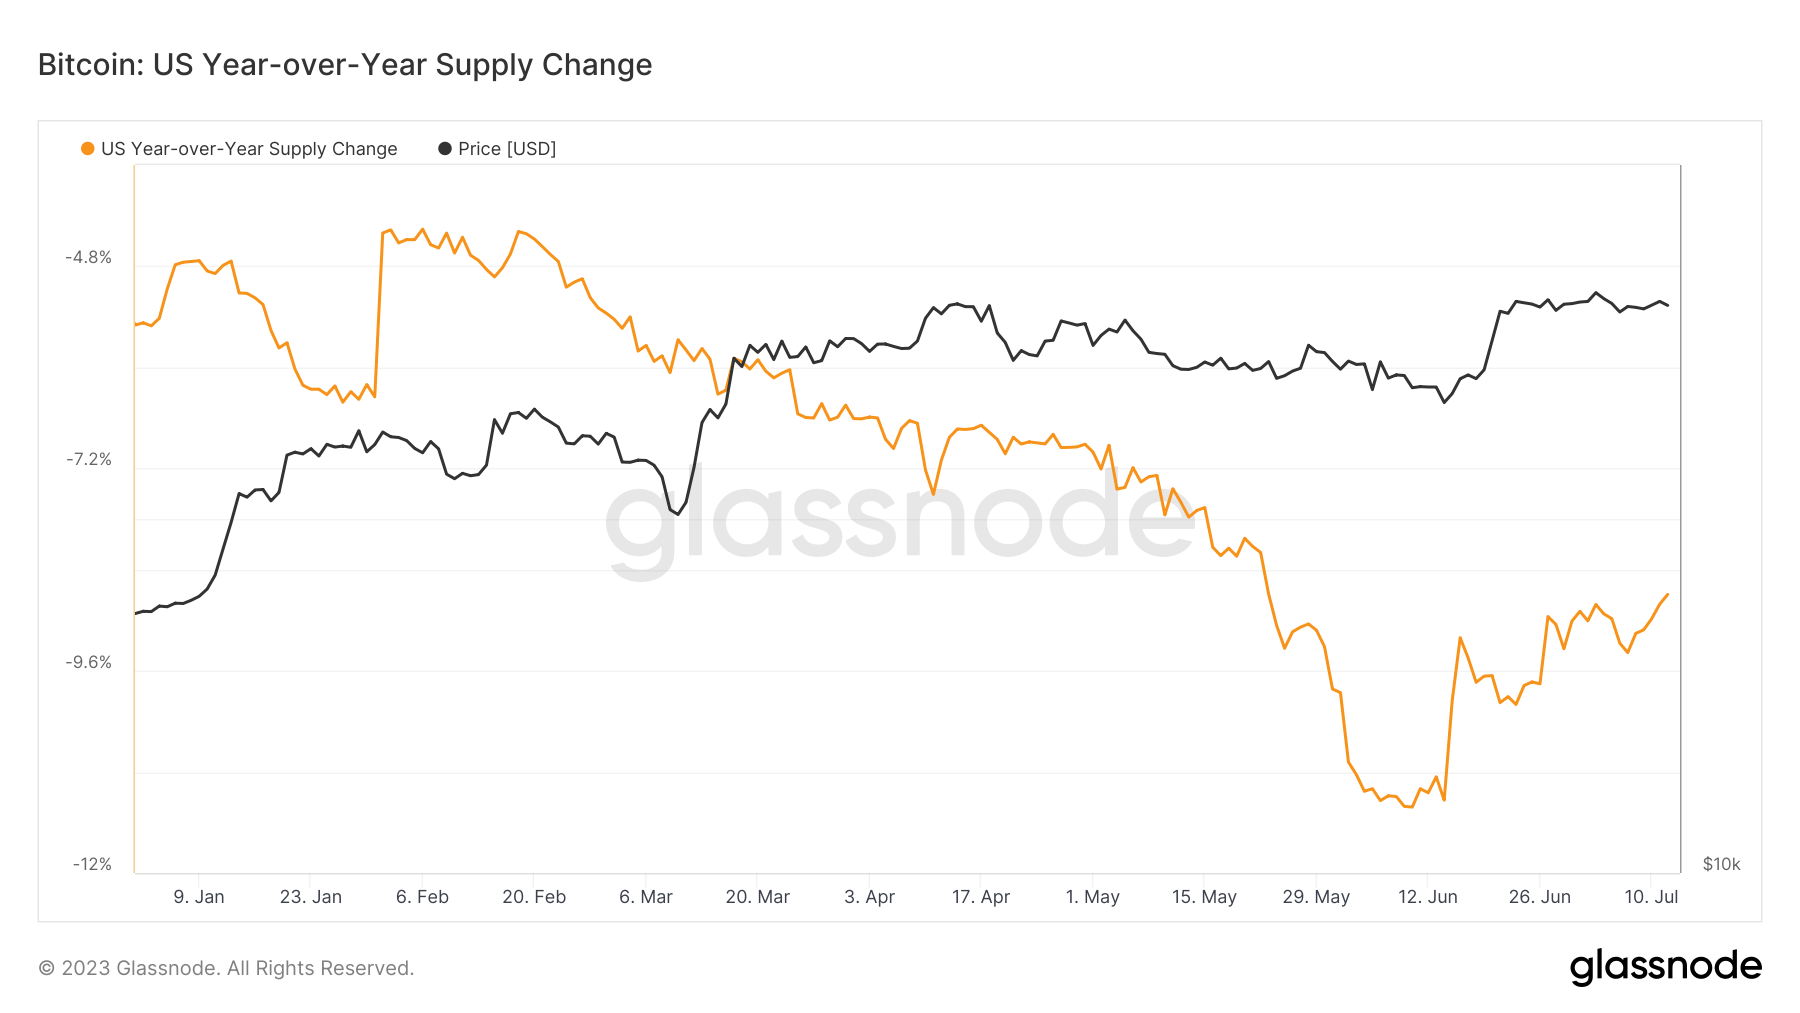 US supply change year-on-year